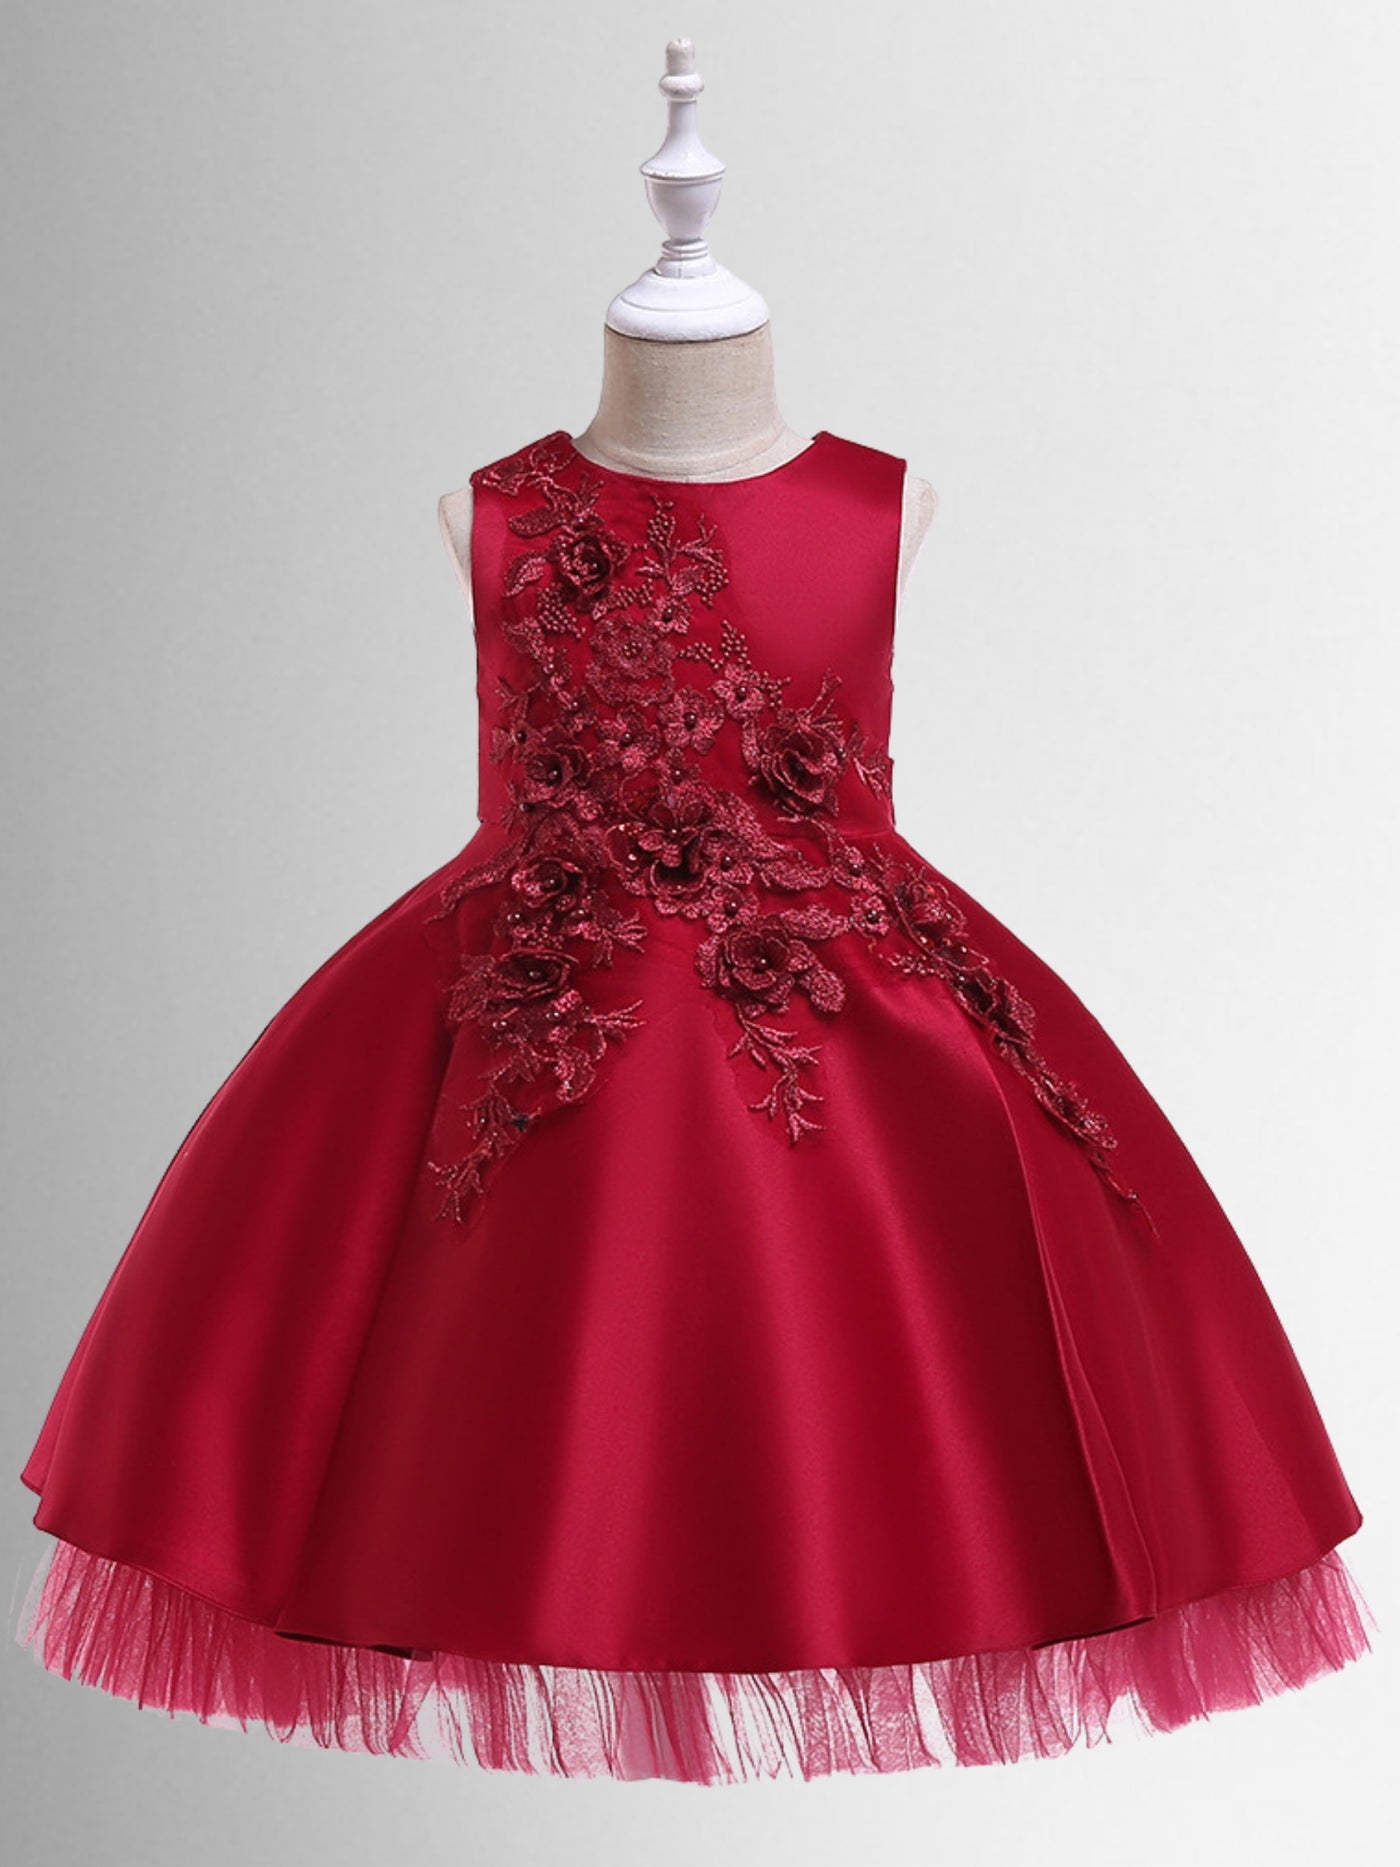 Winter Formal Dresses | Girls Red Pearl Embellished Holiday Dress 